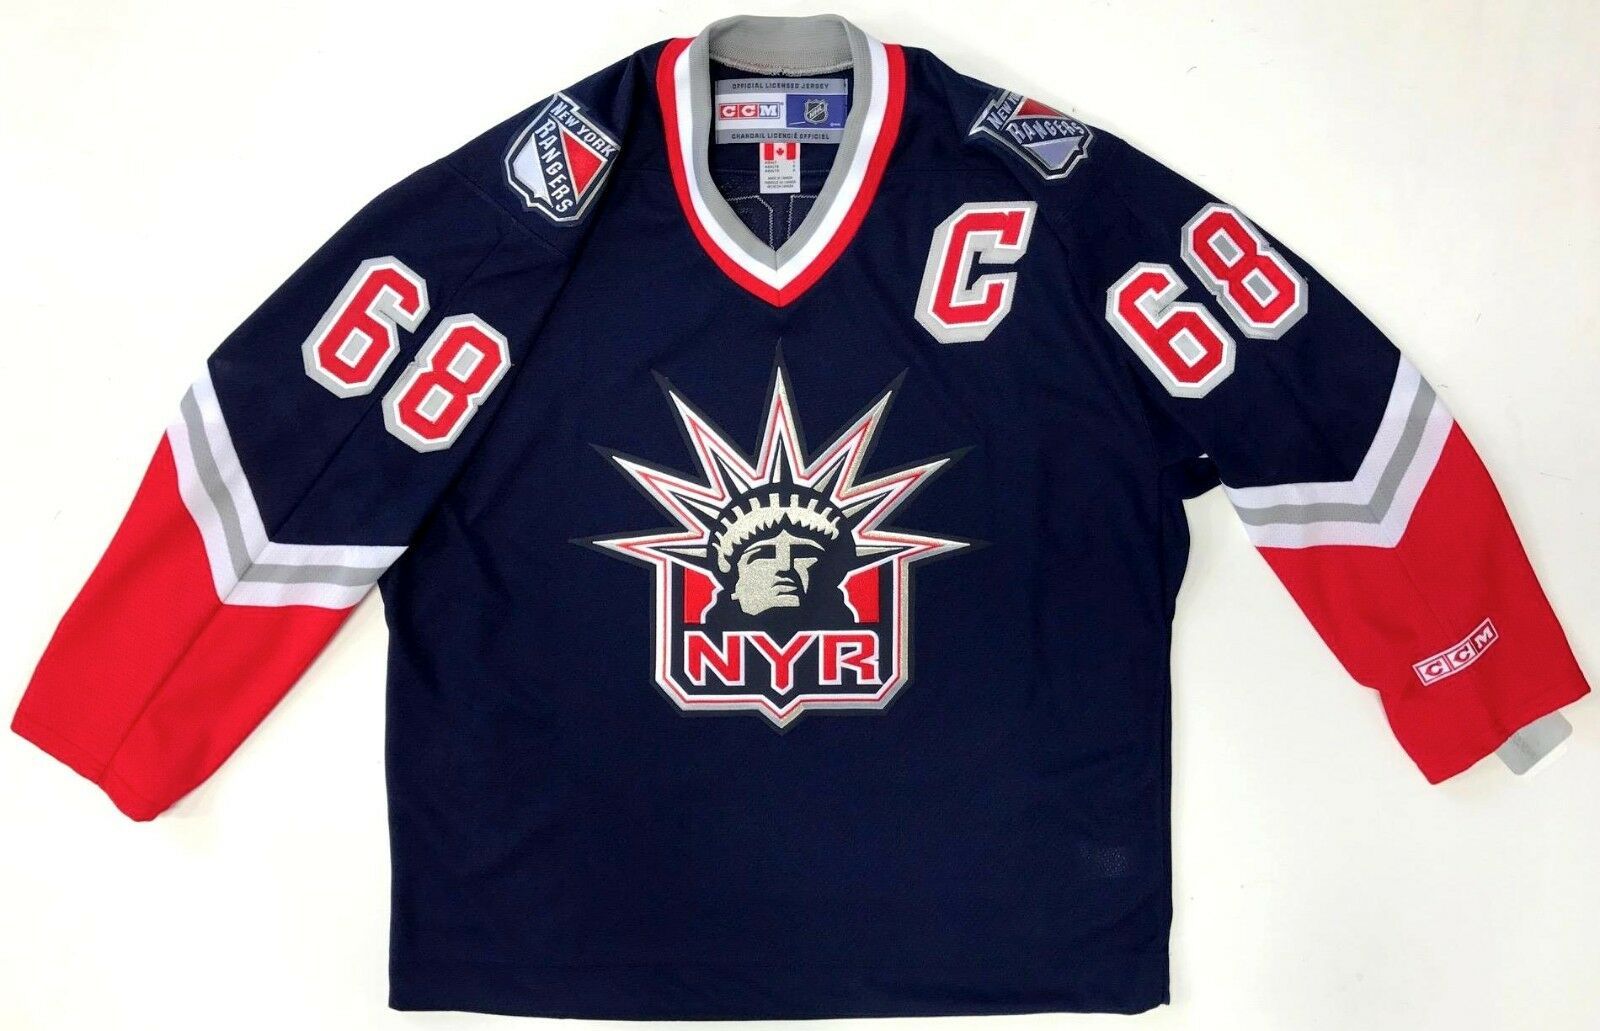 Wayne Gretzky New York Rangers Jersey Statue of Liberty